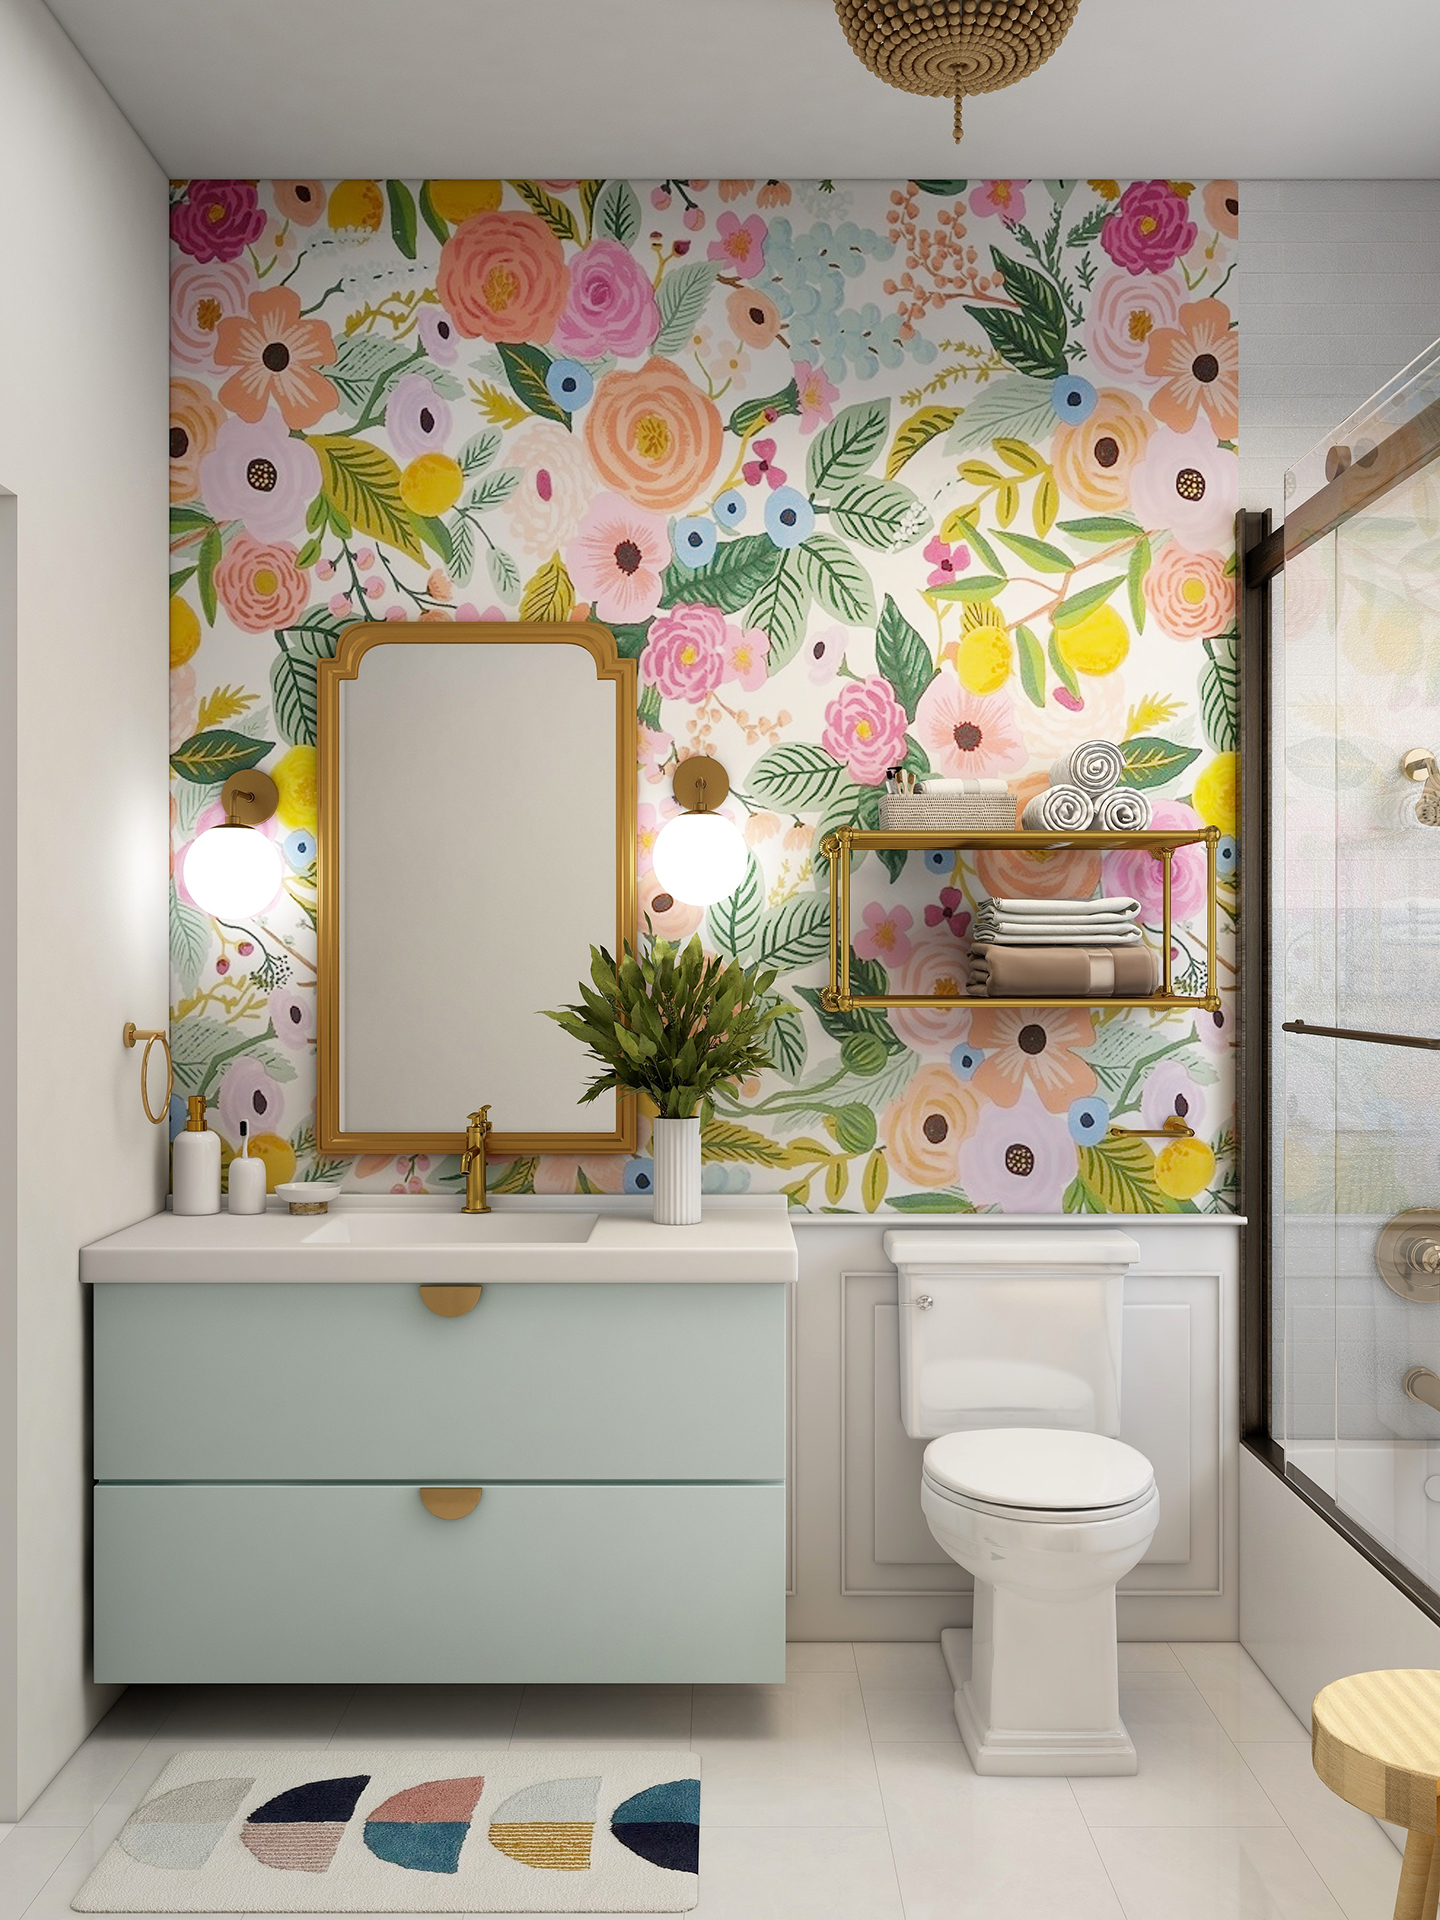 SOFT FLOWERS Wallpaper with floral pattern By Studijo | design Josipa Maras